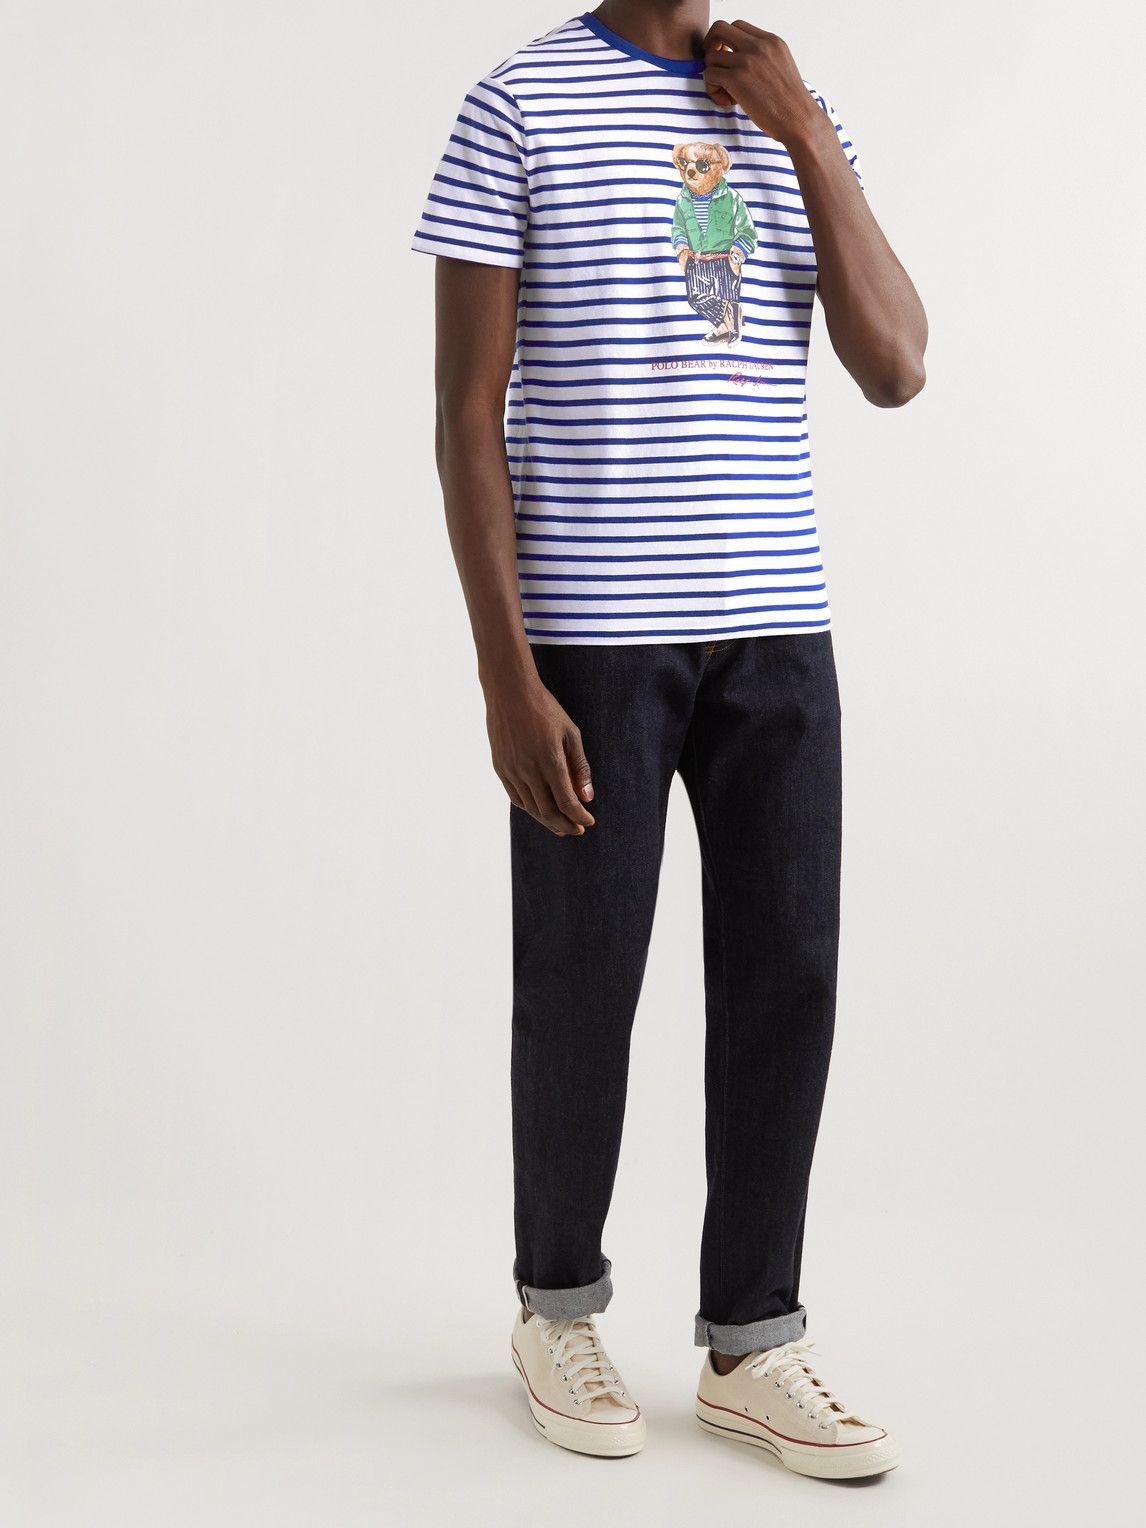 Polo Ralph Lauren - Printed Striped Cotton-Jersey T-Shirt - Blue